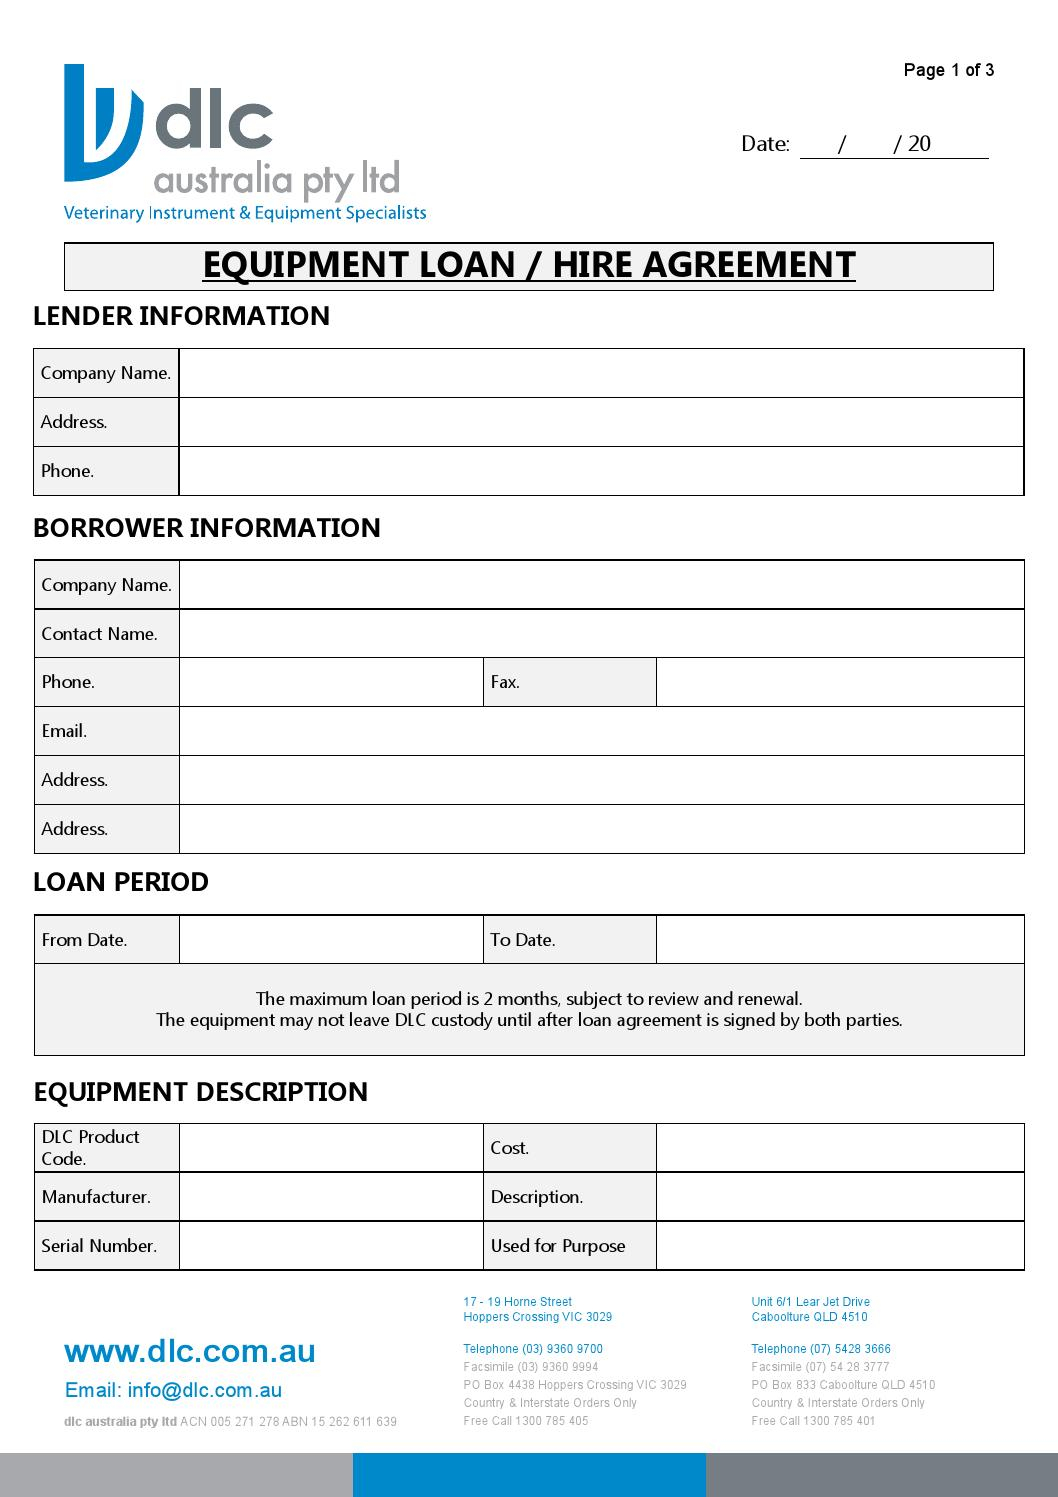 Loan Of Equipment Agreement Equipment Loan Hire Agreement Interactive Dlc Australia Pty Ltd